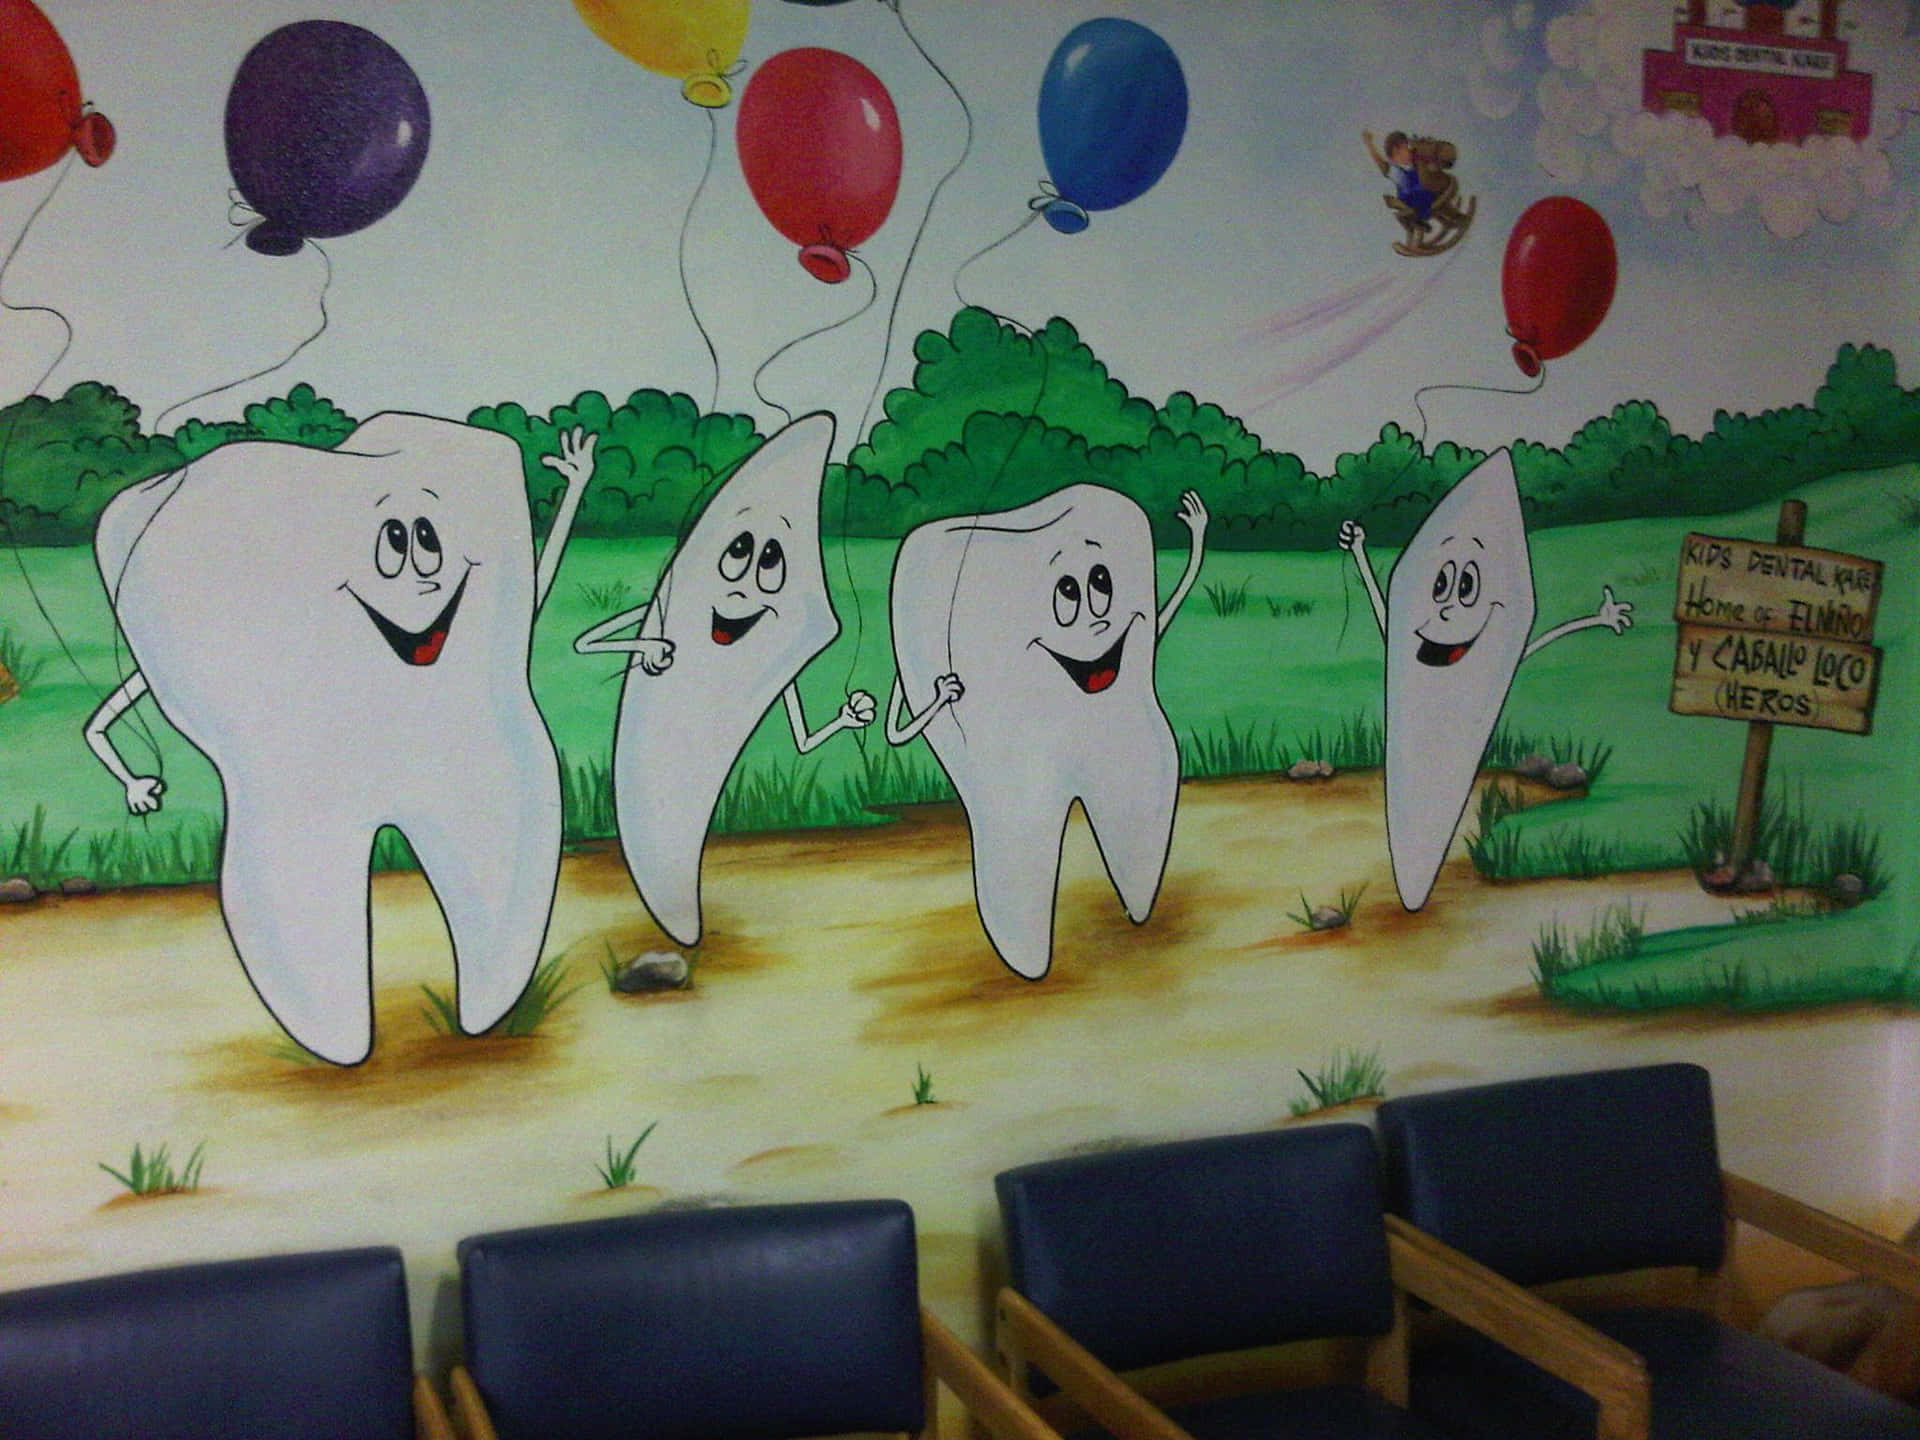 Maintaining dental health through quality care